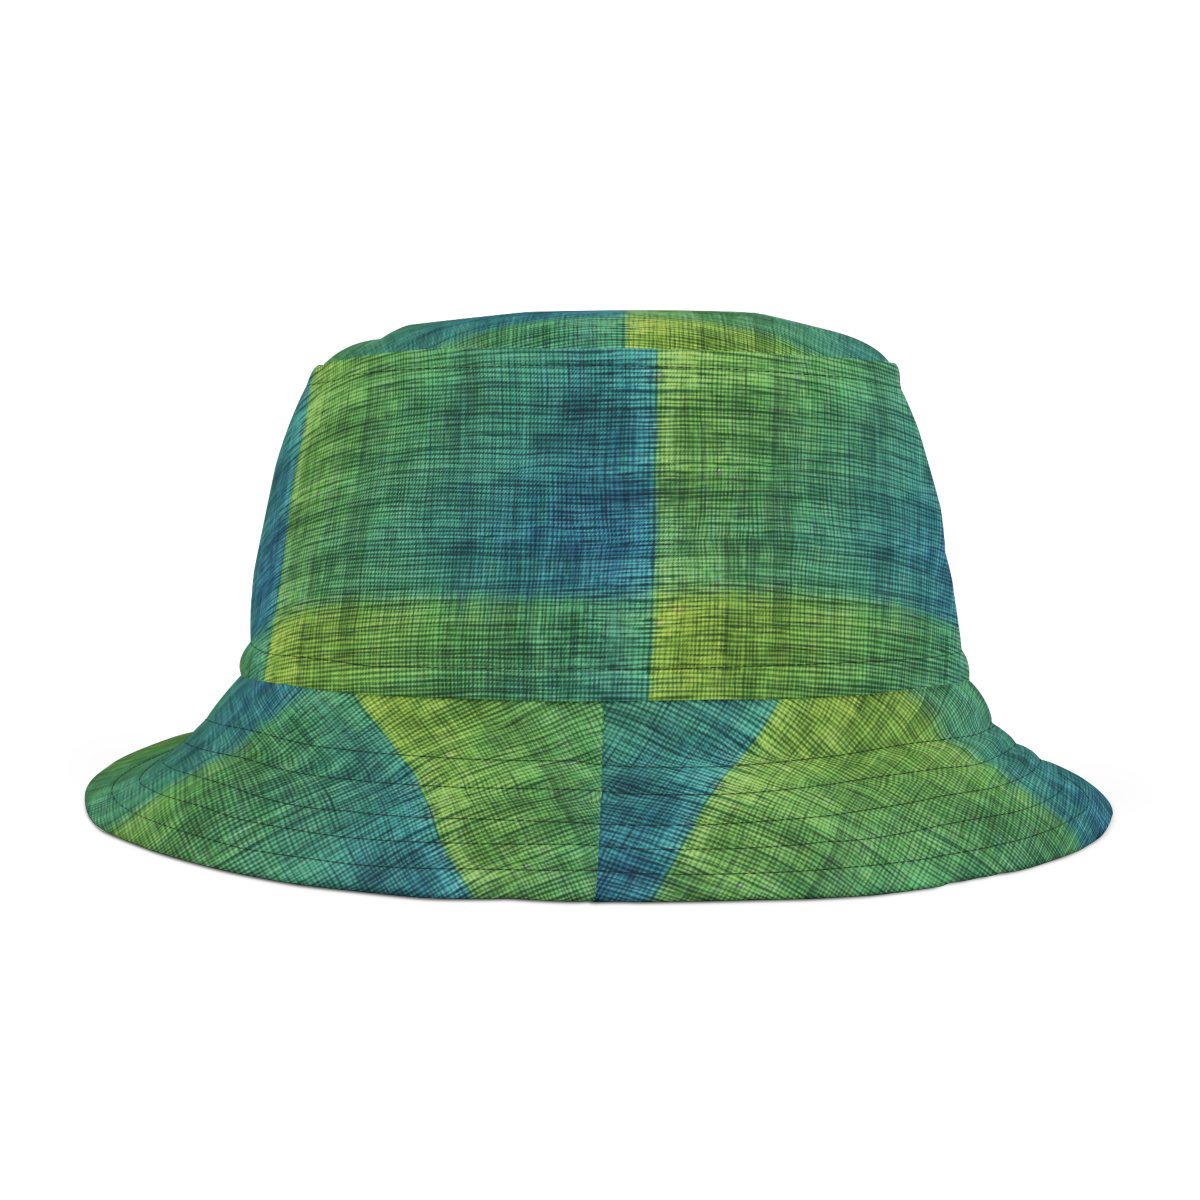 Green to Blue Gradient Burlap Patterns - Blues and Greens - Biker Bucket Hat